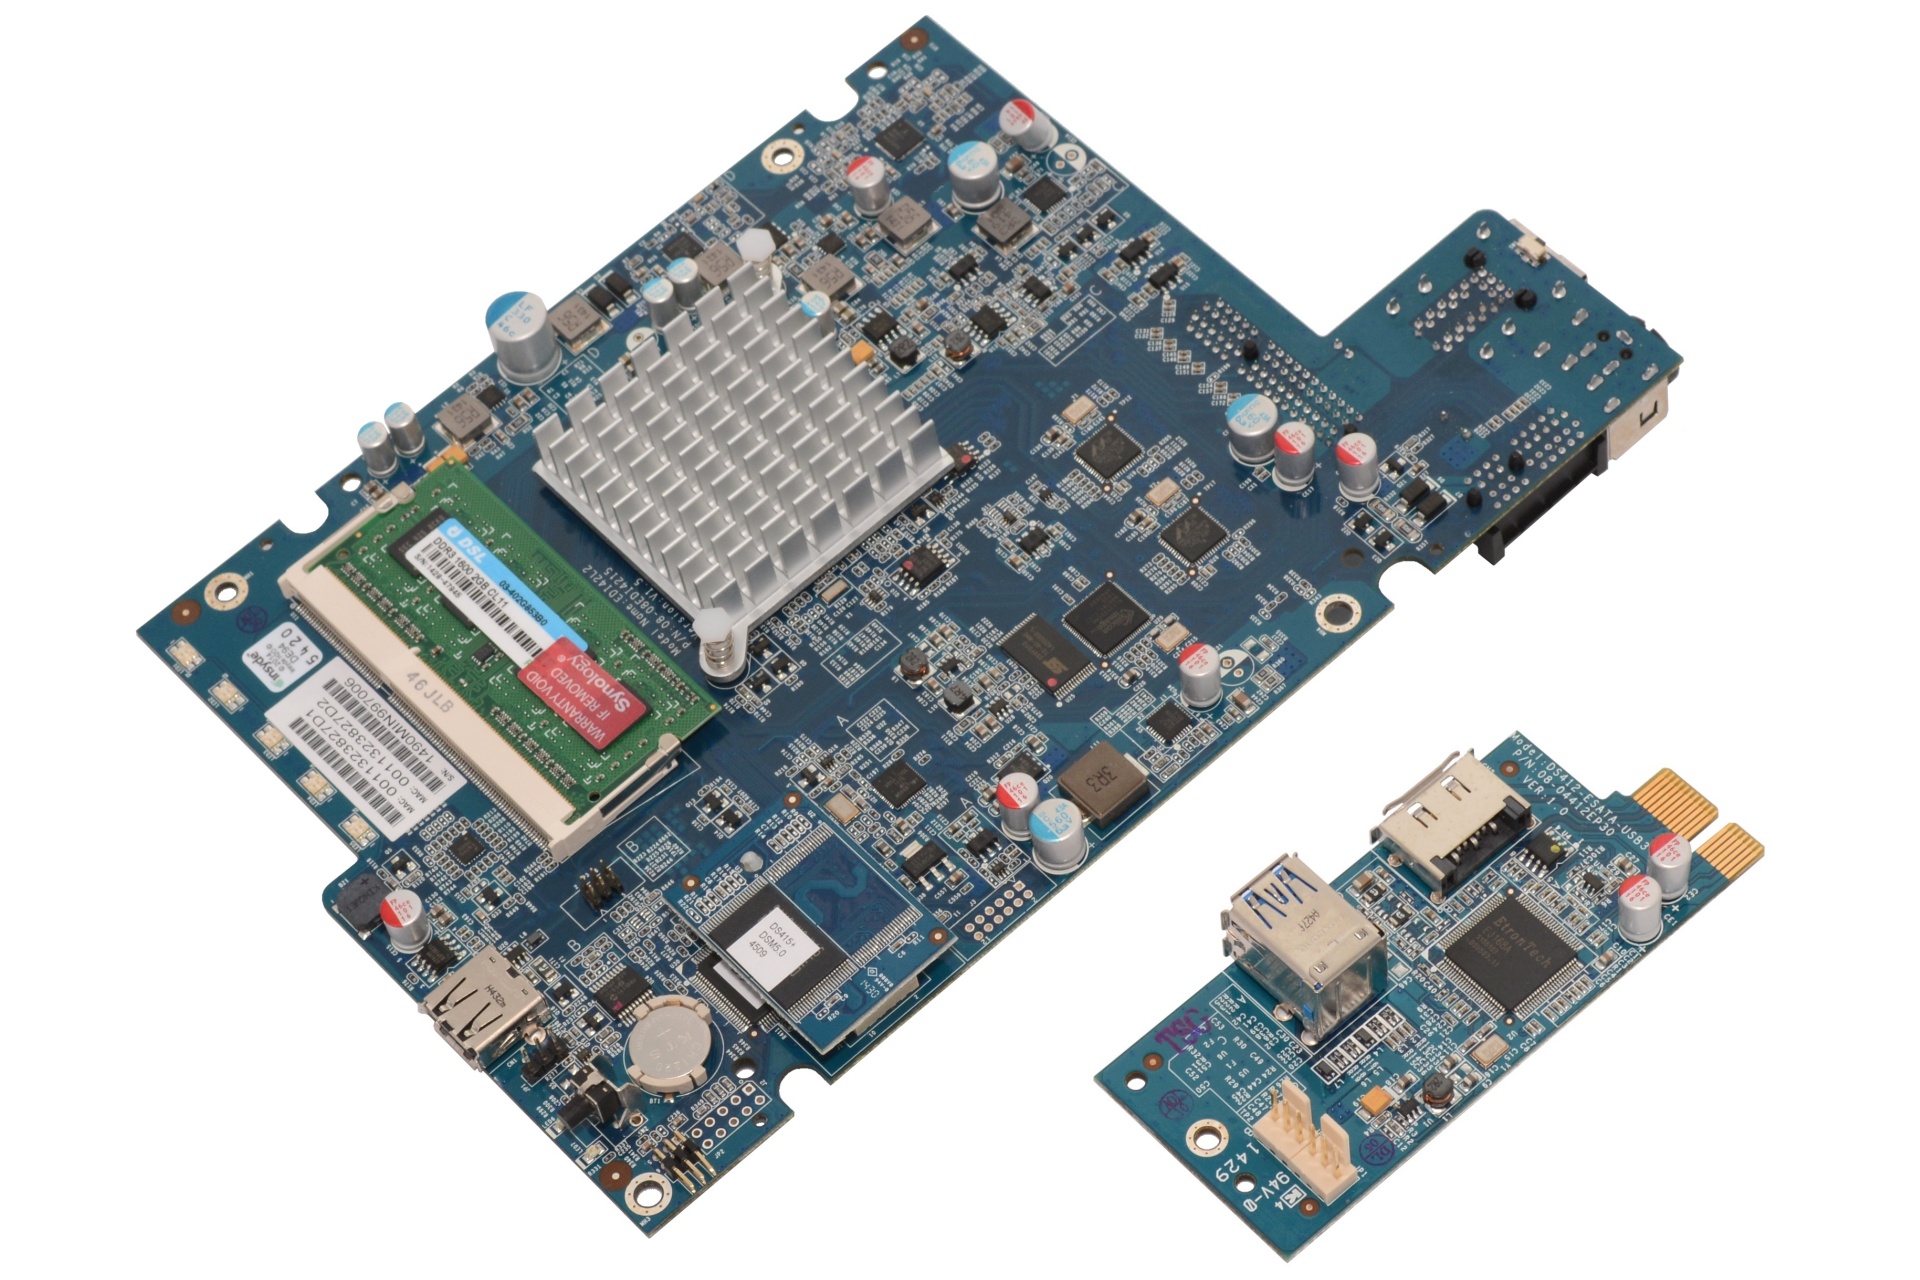 Synology DiskStation DS415+ main PCB and 2 port Gigabit Ethernet daughter PCB